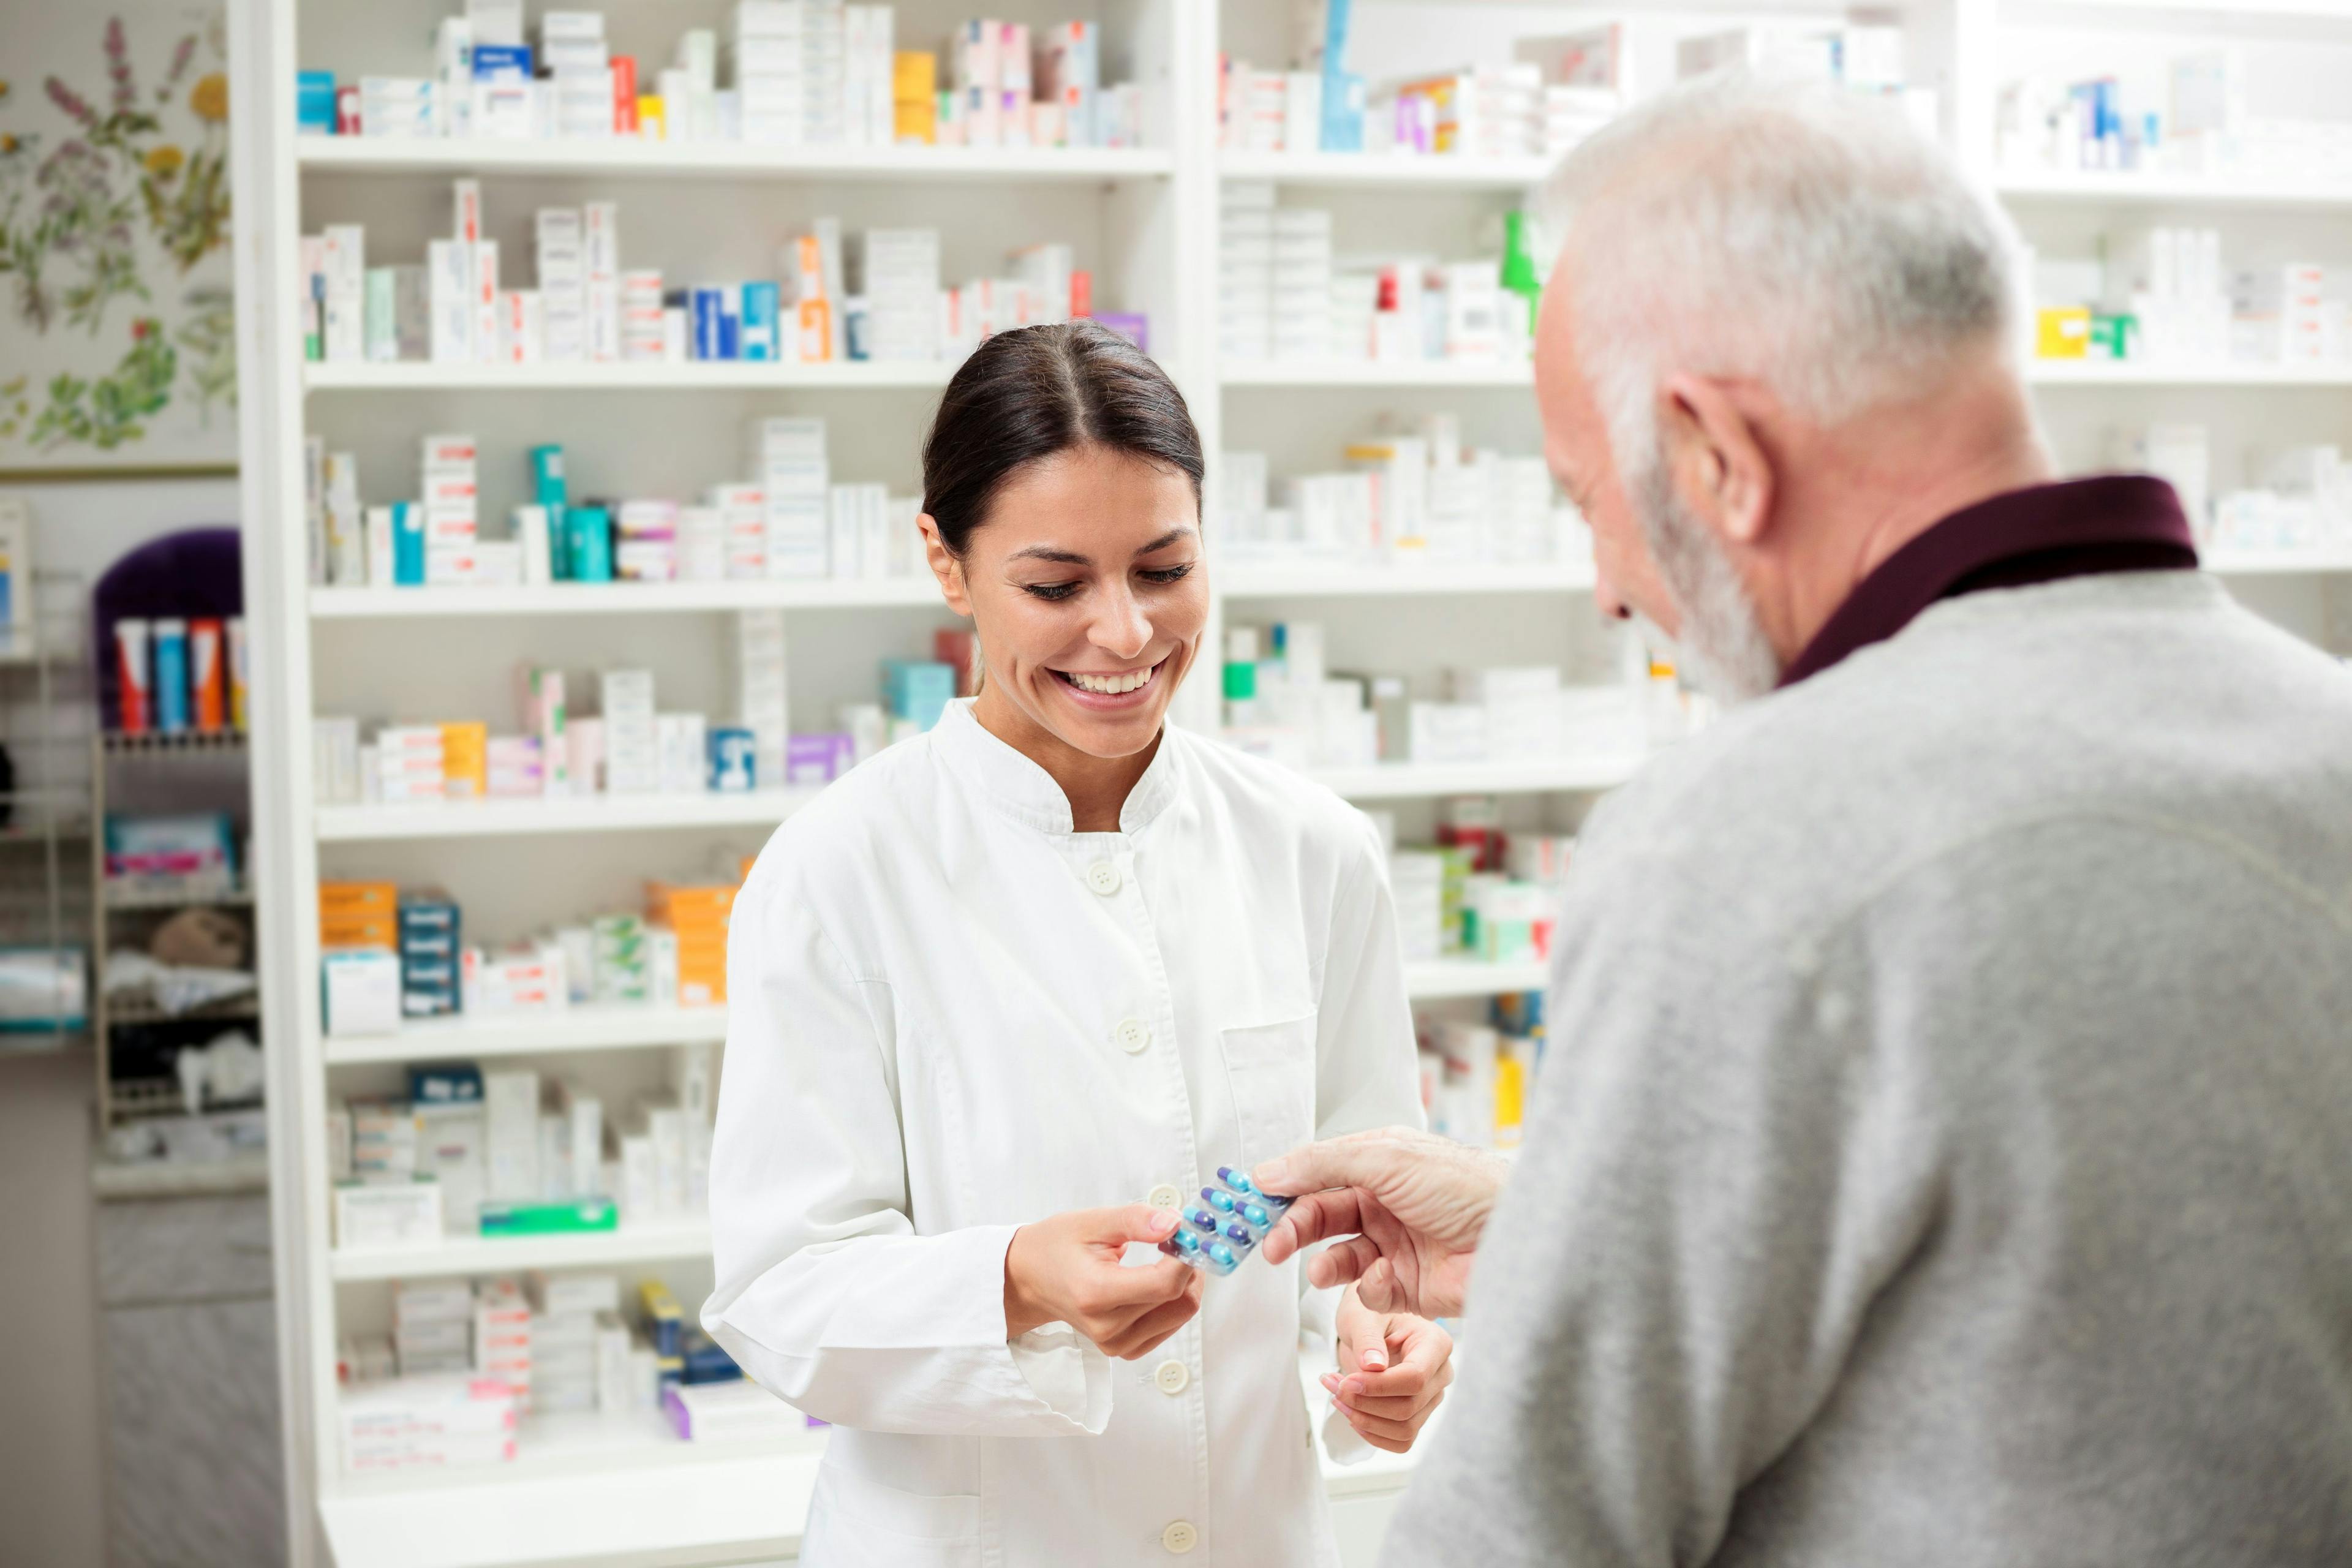 happy pharmacist giving medications to senior man customer | Image Credit: Ivan - stock.adobe.com